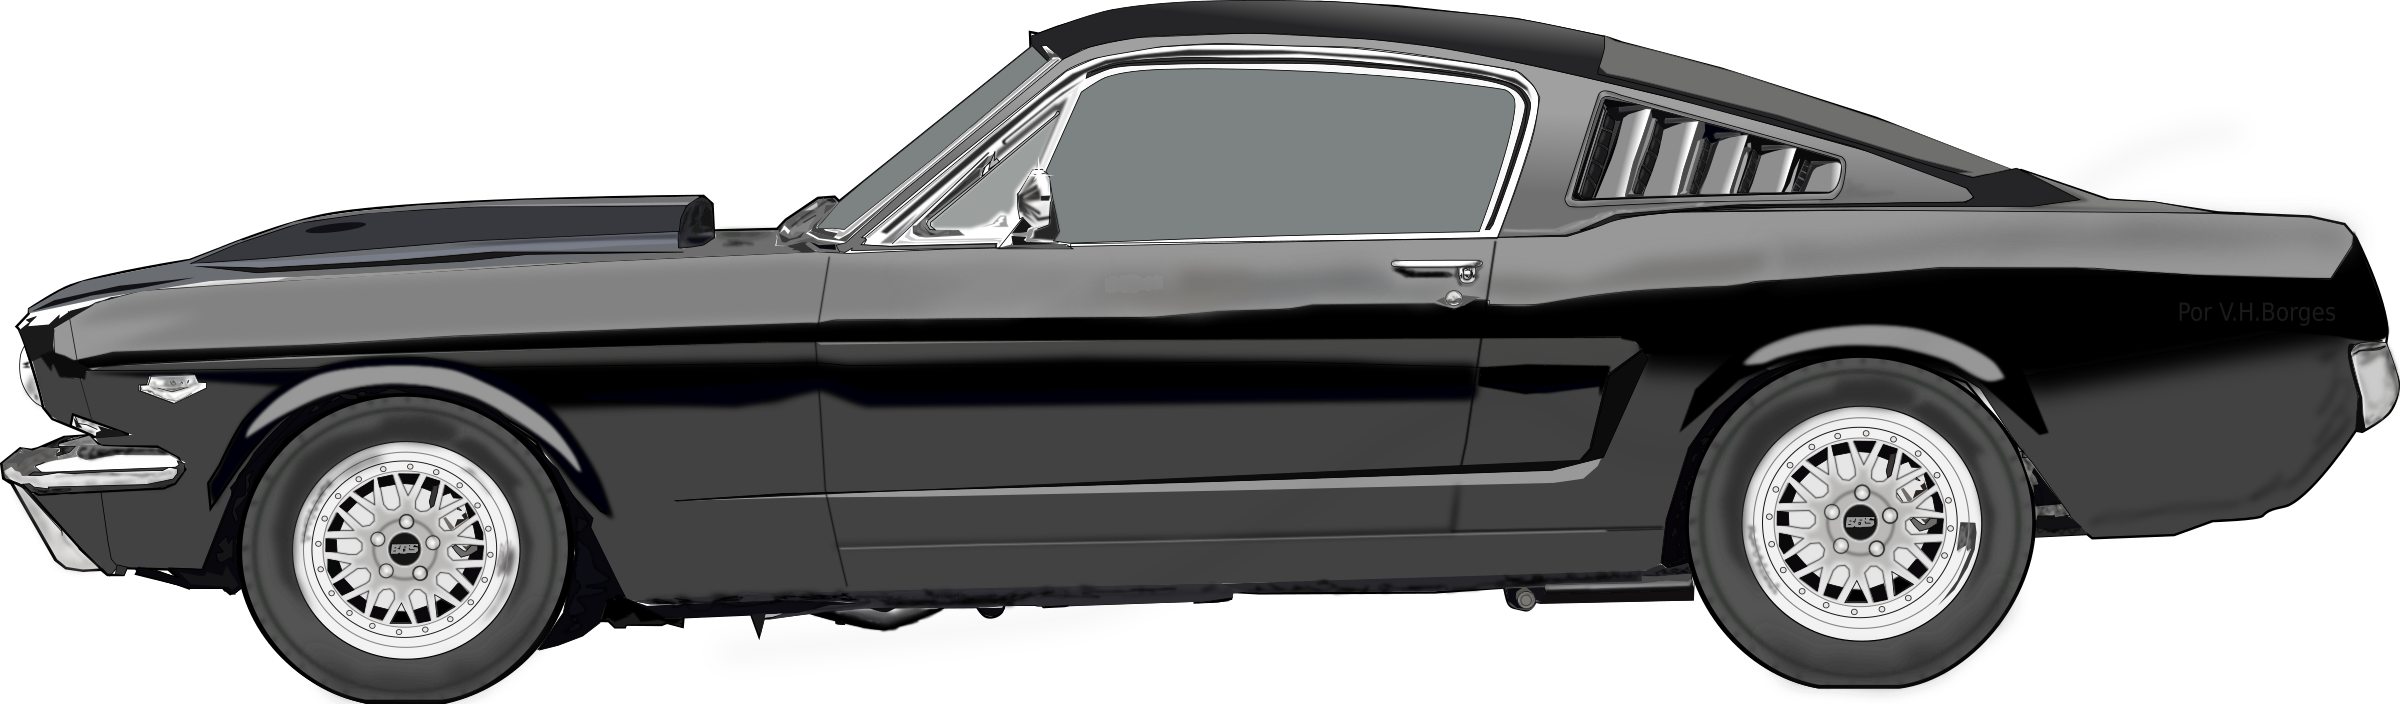 Big Image - Ford Mustang Png (2400x704)